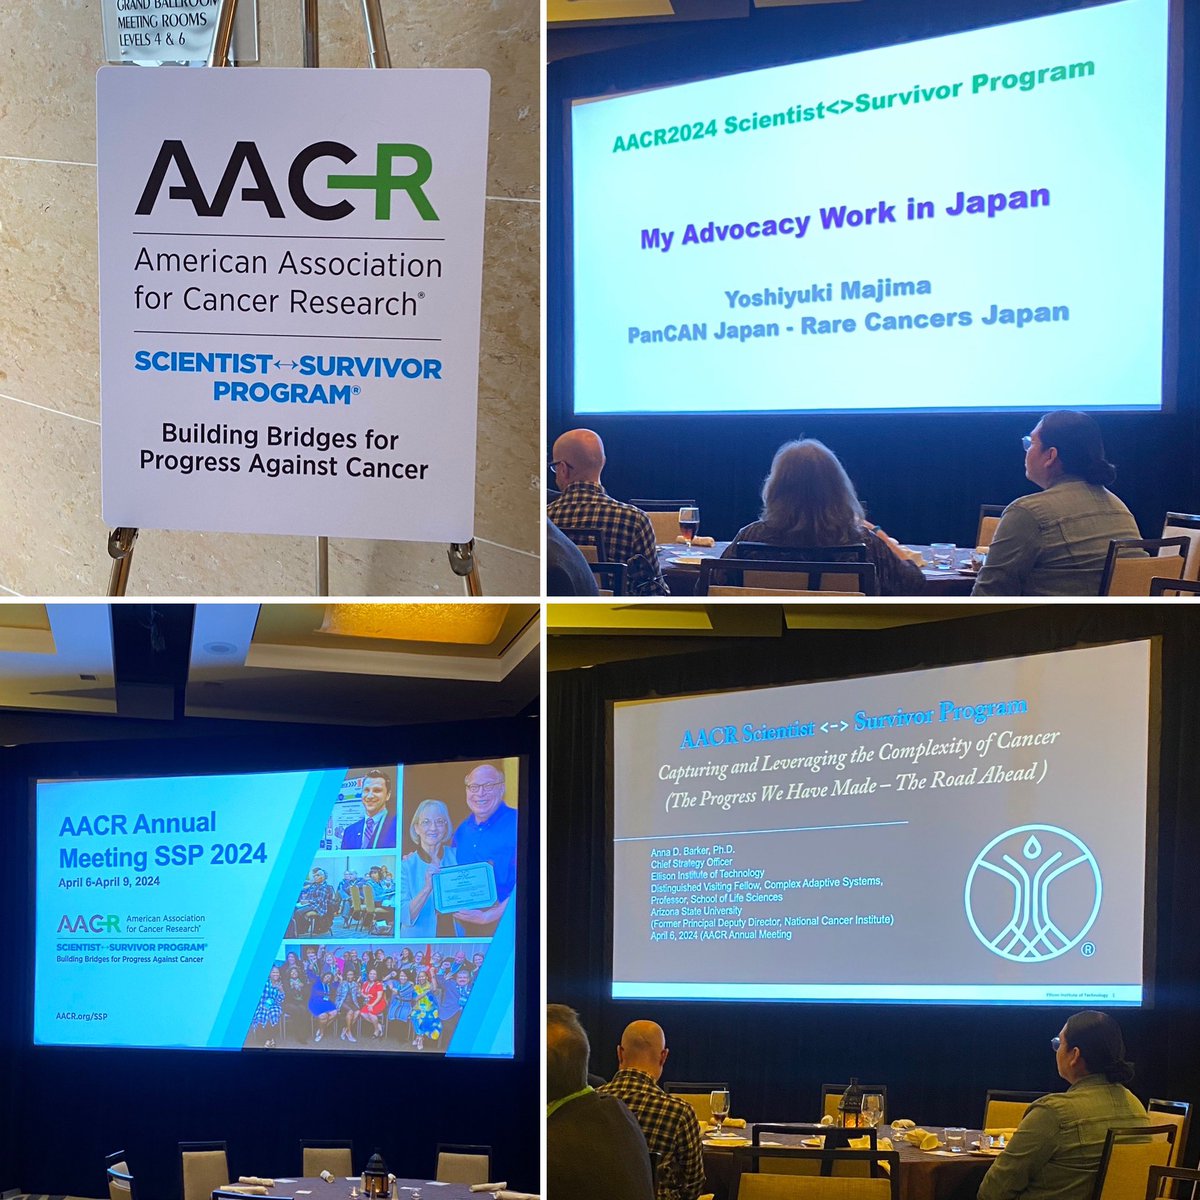 Two great Keynote speakers at @AACR Scientist↔Survivor Program #AACR24 Dinner by program founder Dr. @AnnaBarker20 and Japan PanCAN Japan President & SSP advocate @yoshiyukimajima #AACRSSP